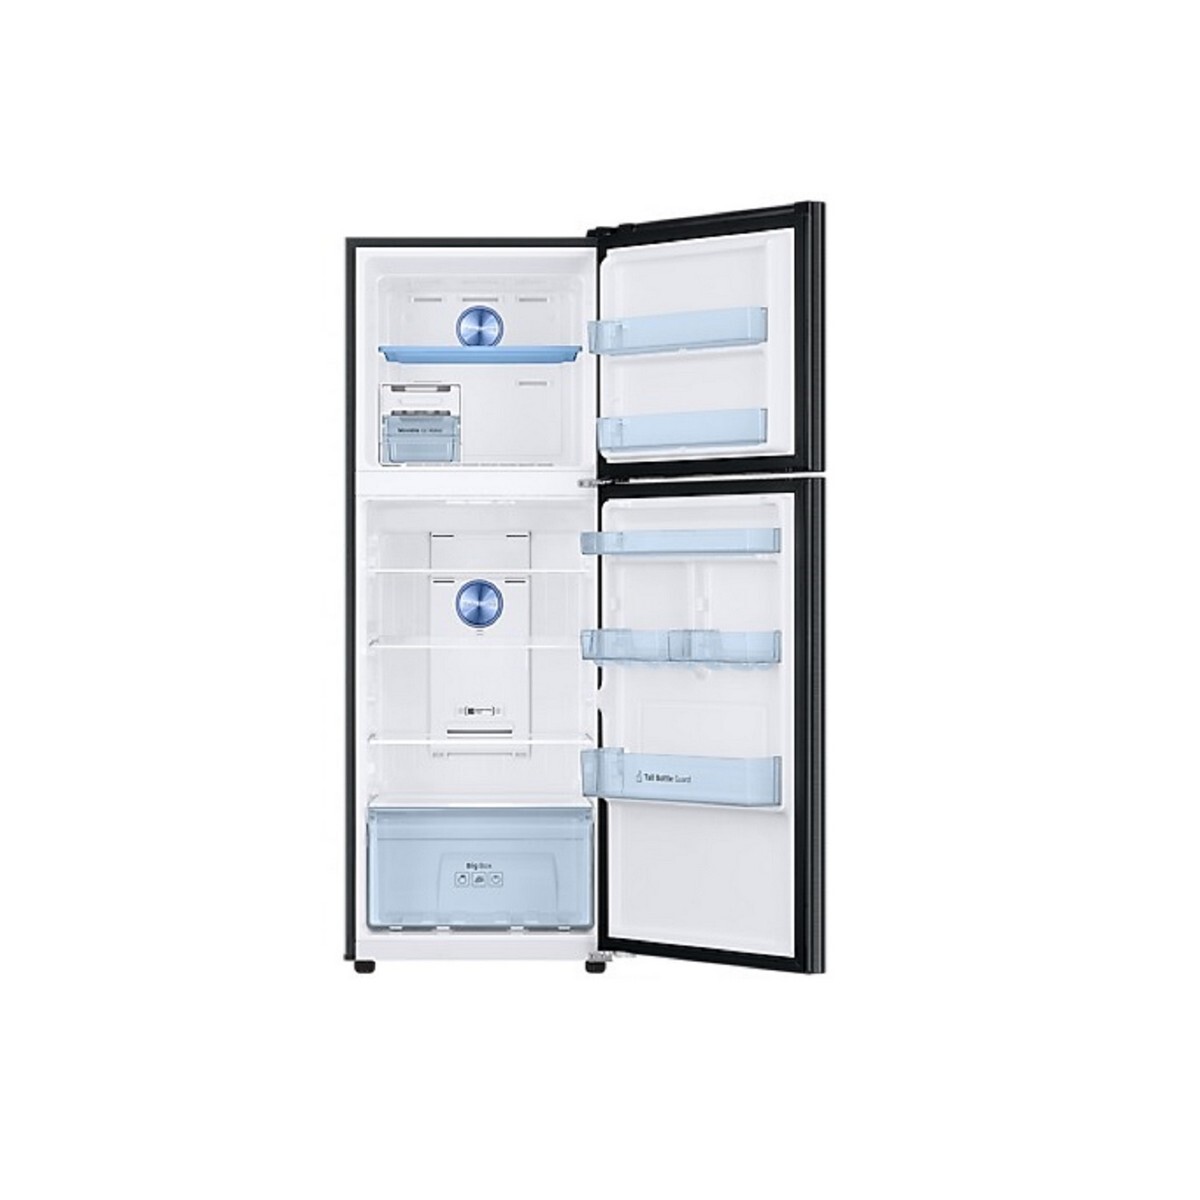 Samsung Refrigerator RT34C4522BX 301L